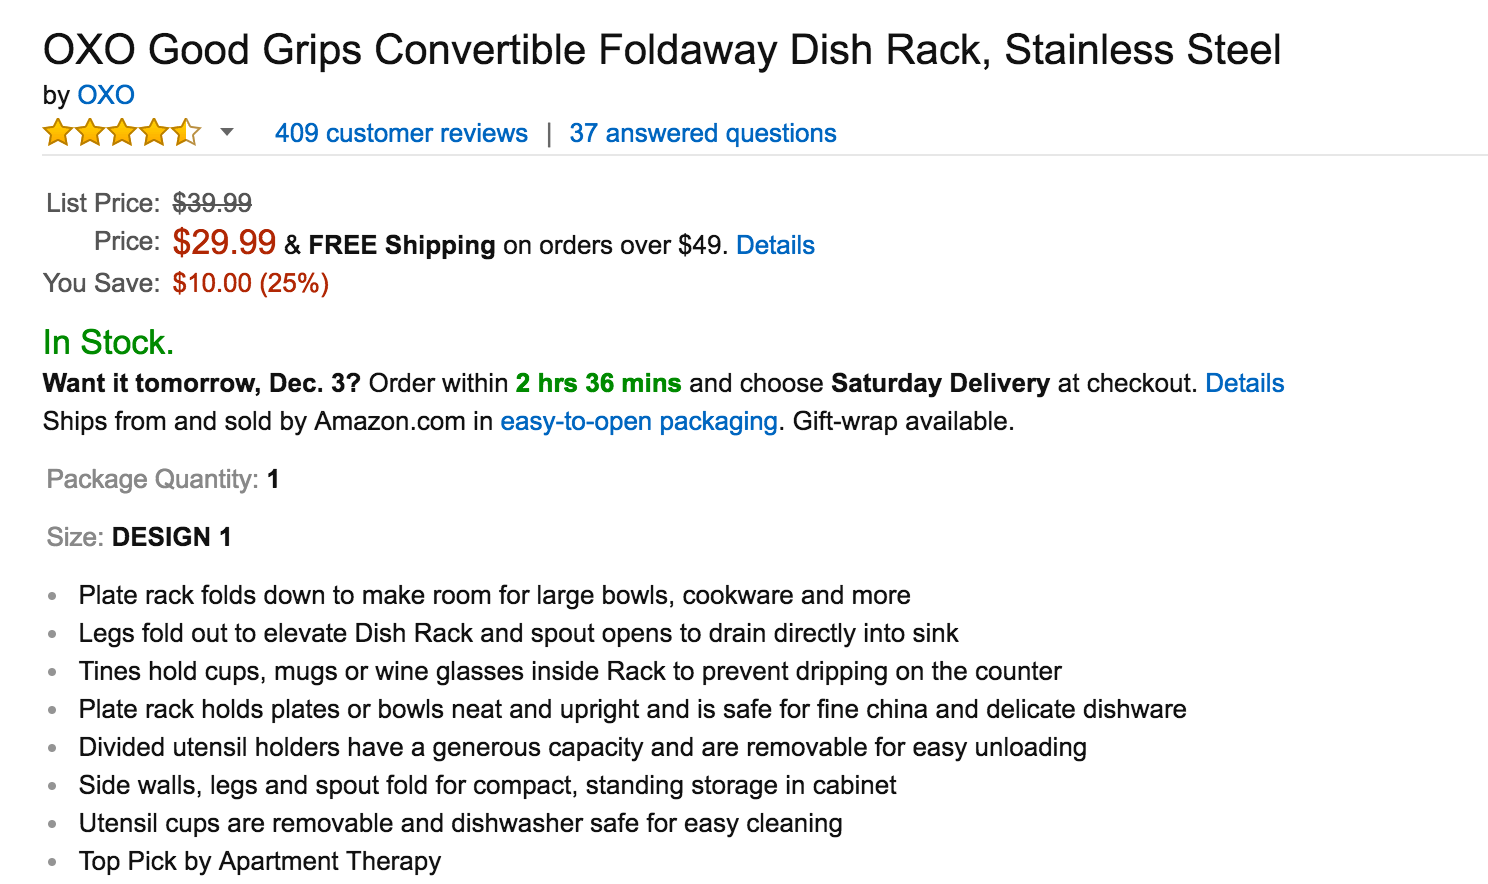 oxo-good-grips-convertible-foldaway-dish-rack-7